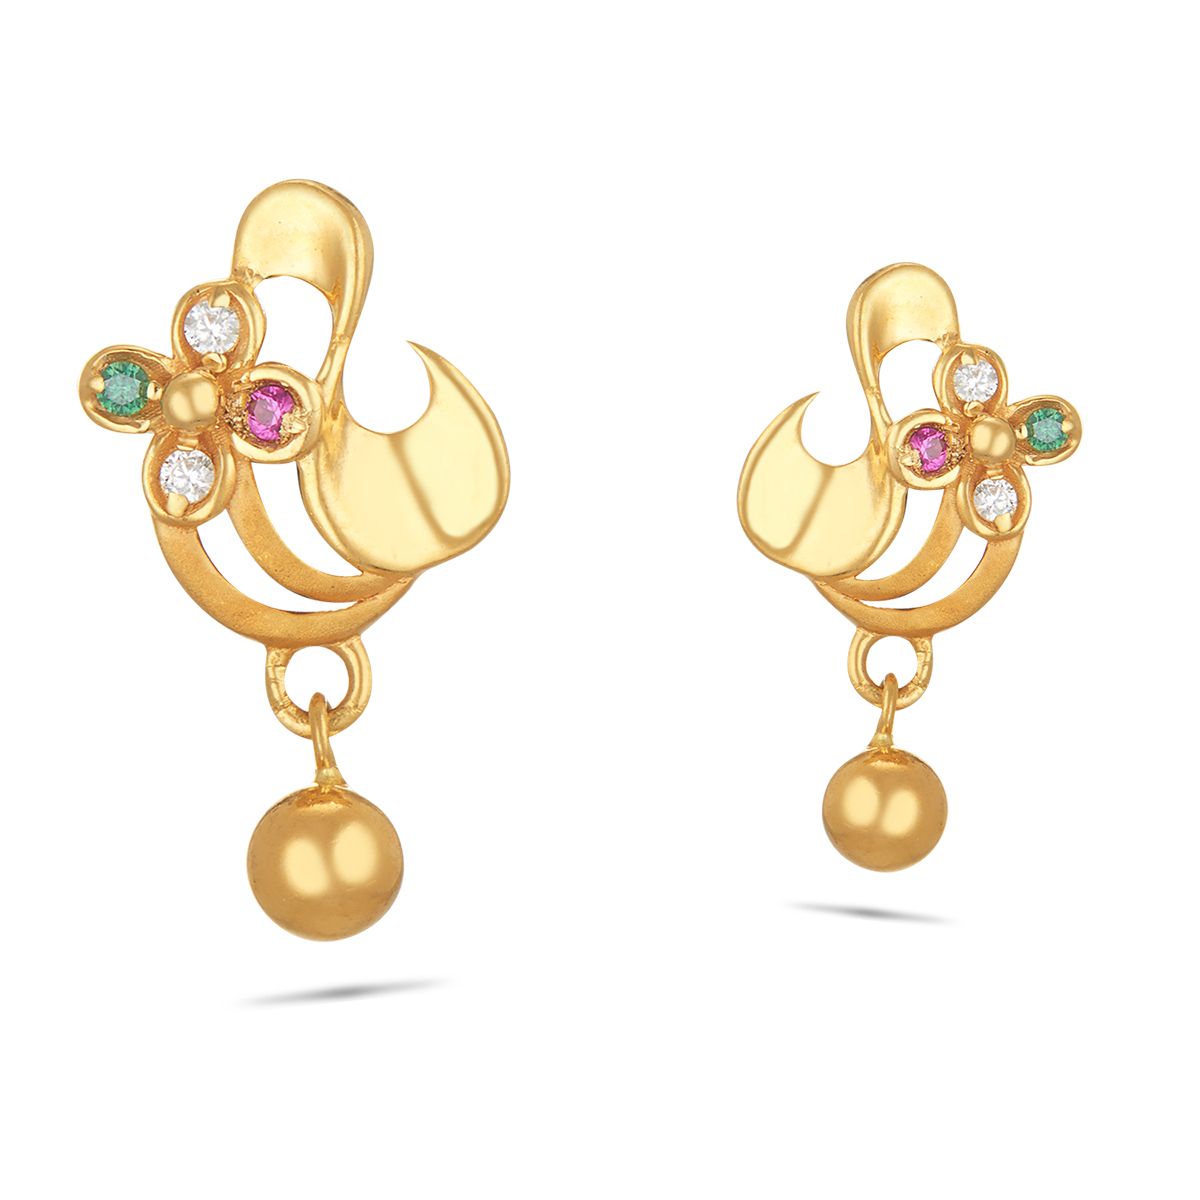 7 Gold Earrings Designs For Daily Use - ZeroKaata Studio